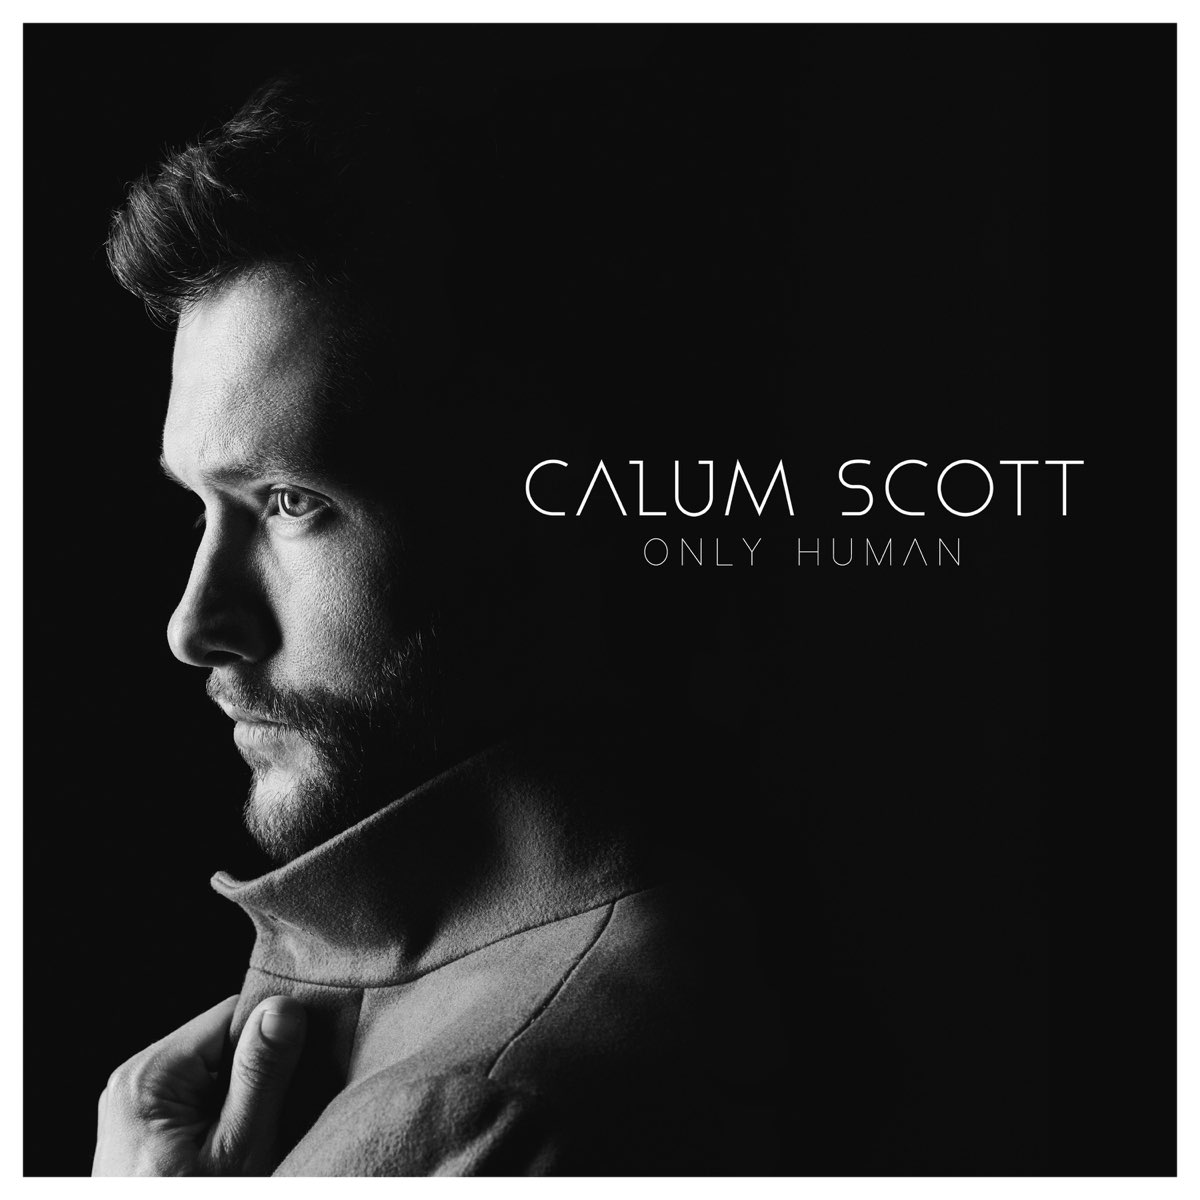 Only Human (Deluxe) - Album by Calum Scott - Apple Music